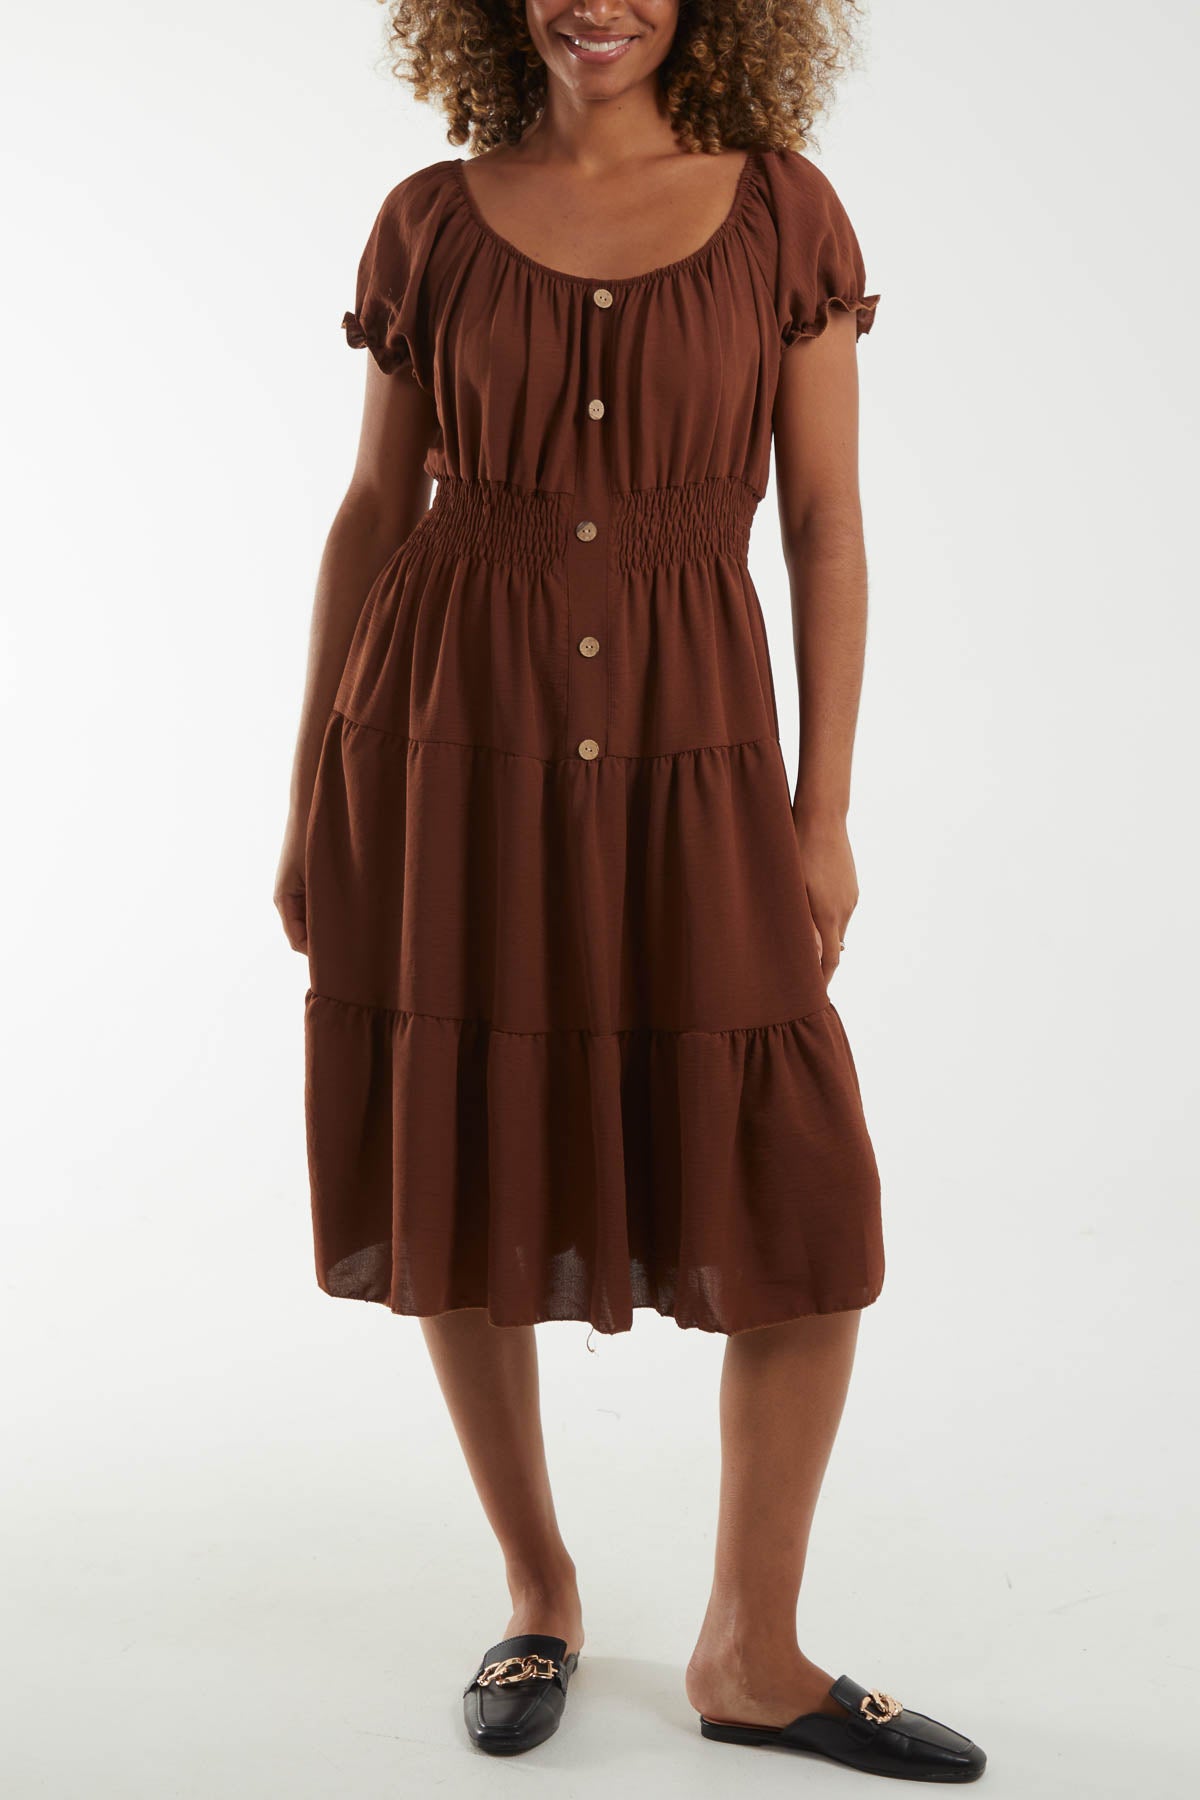 Scoop Neck/Bardot Shirred Bodice Tiered Button Dress